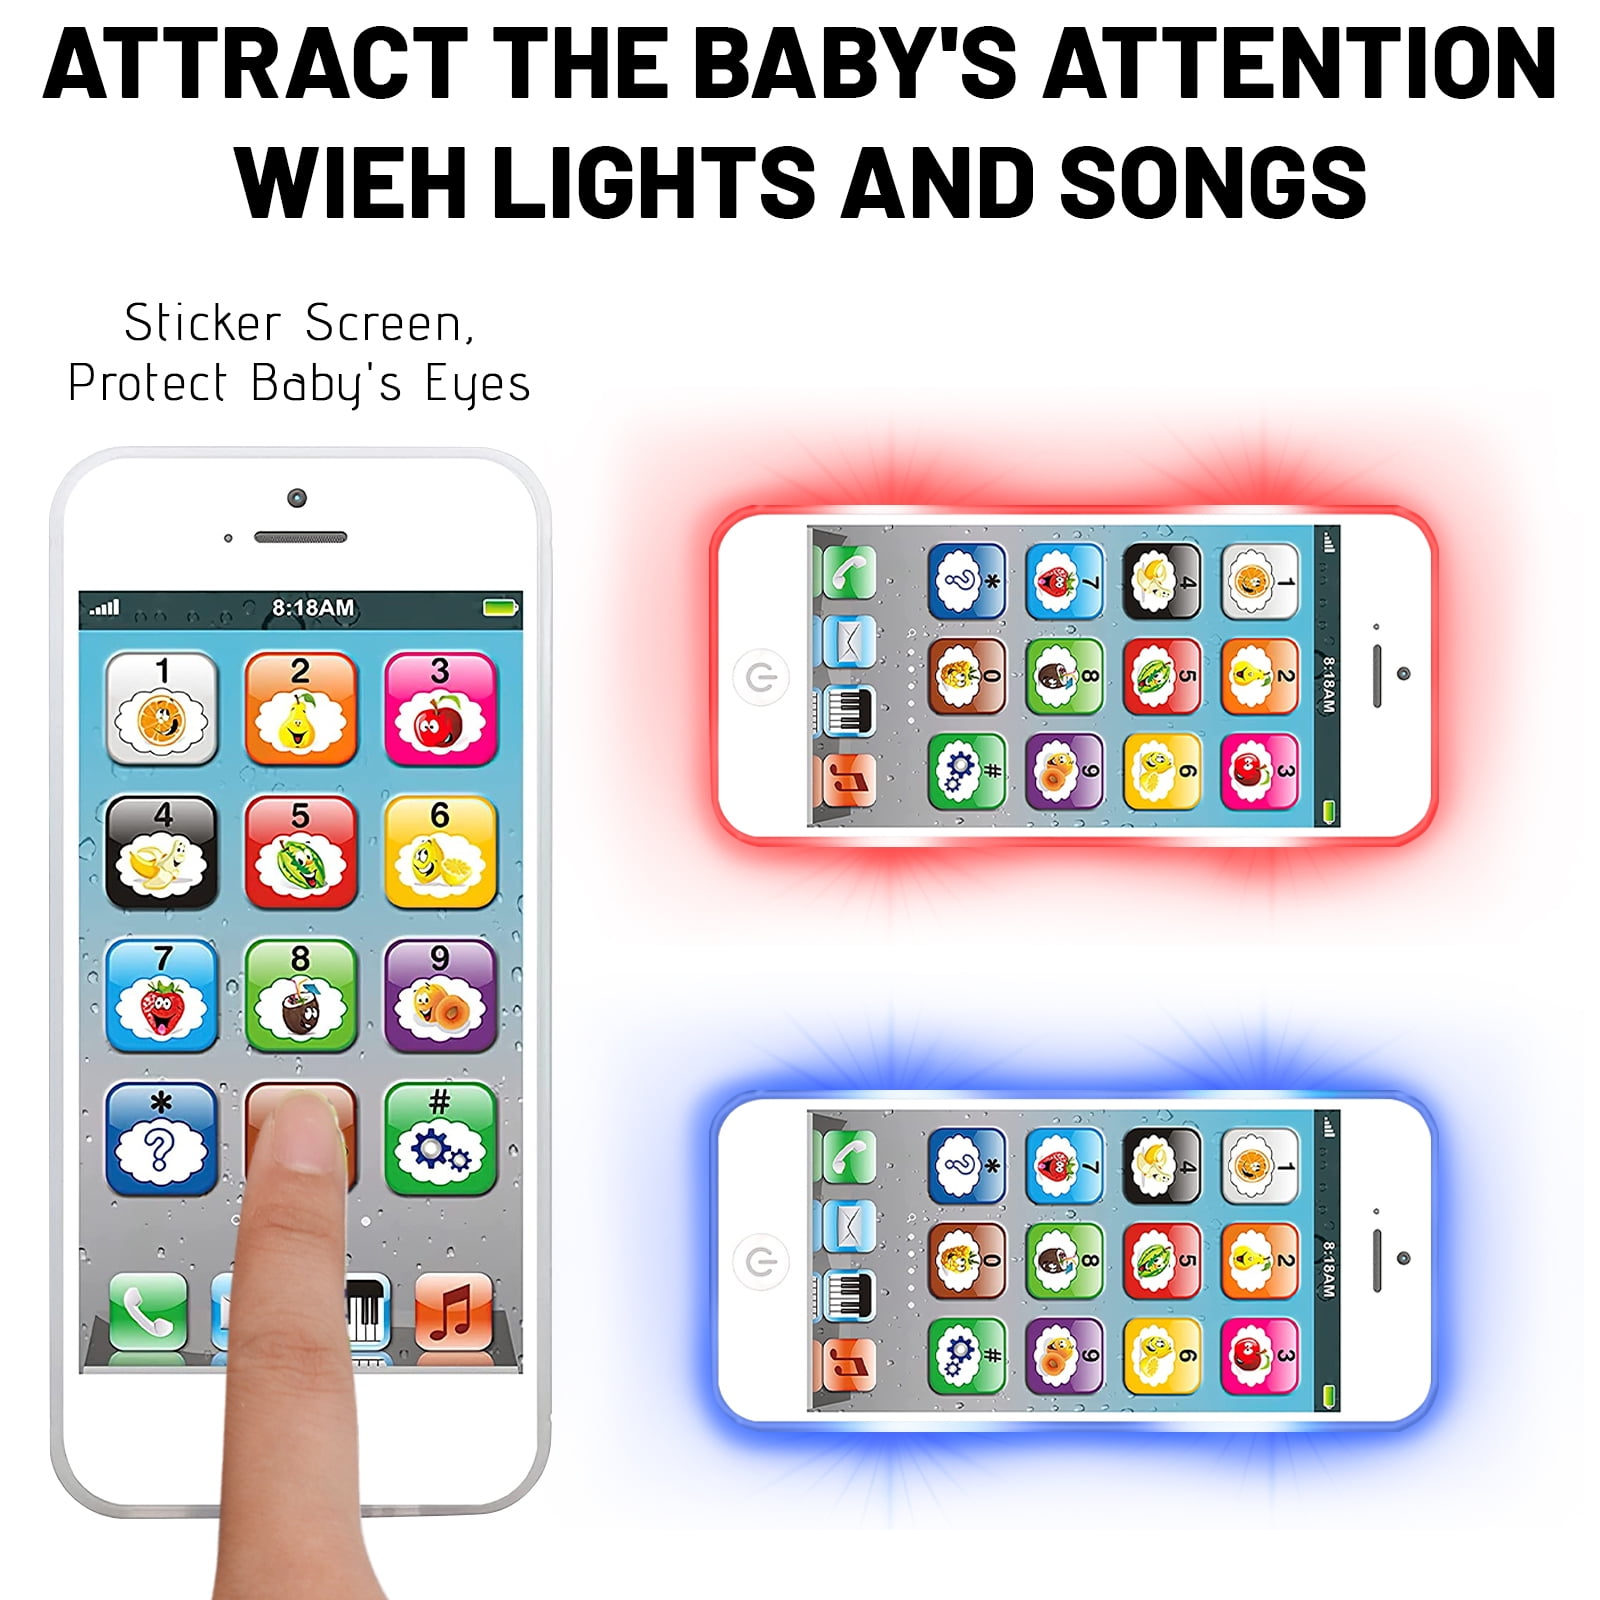 Kids Smart Phone for Girls Touchscreen Kids Phone Unicorn Gifts